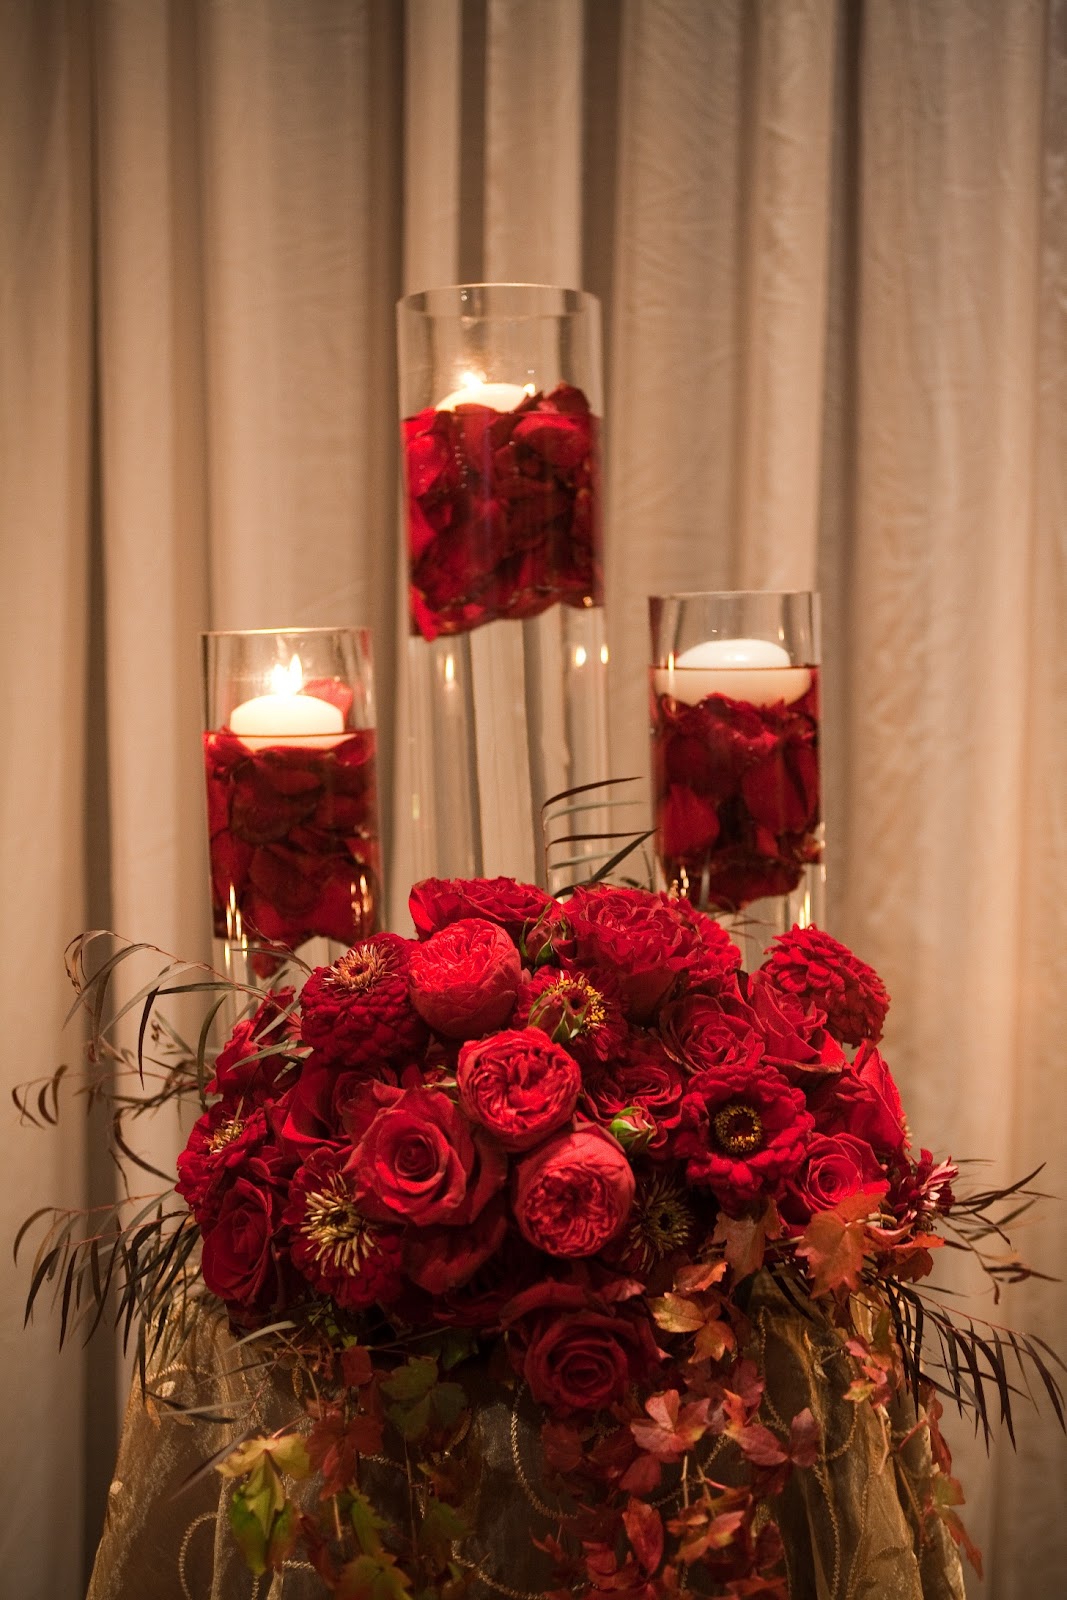 Flora Nova Design - The Blog: A Fall Wedding in Deep Red1067 x 1600